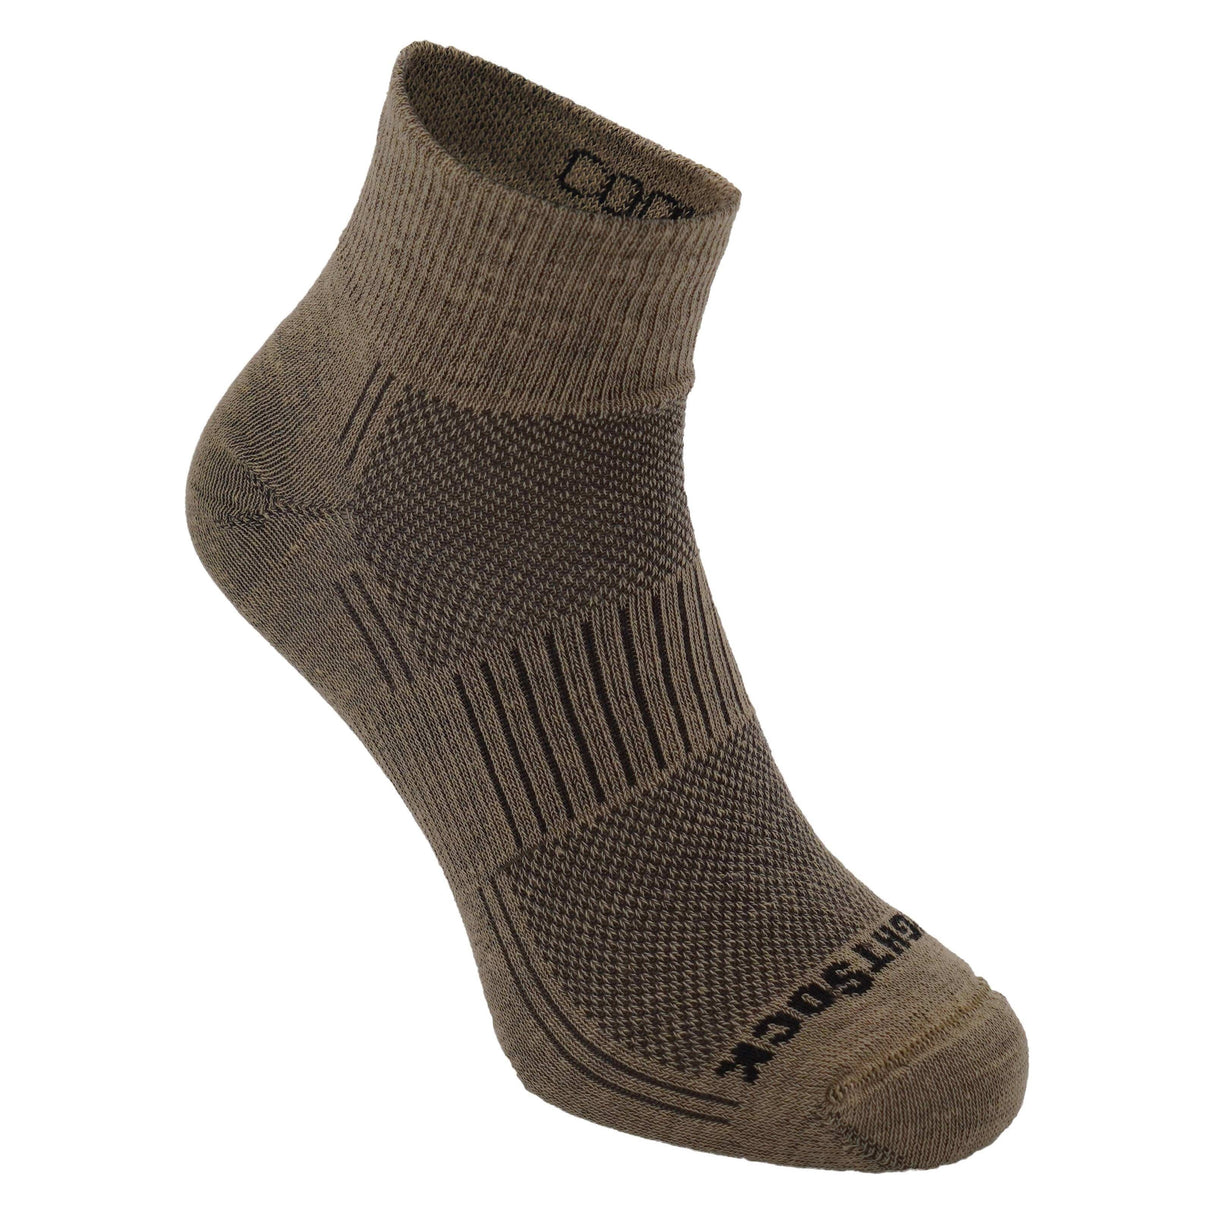 Wrightsock Coolmesh II Quarter Socks  -  Small / Khaki / Single Pair